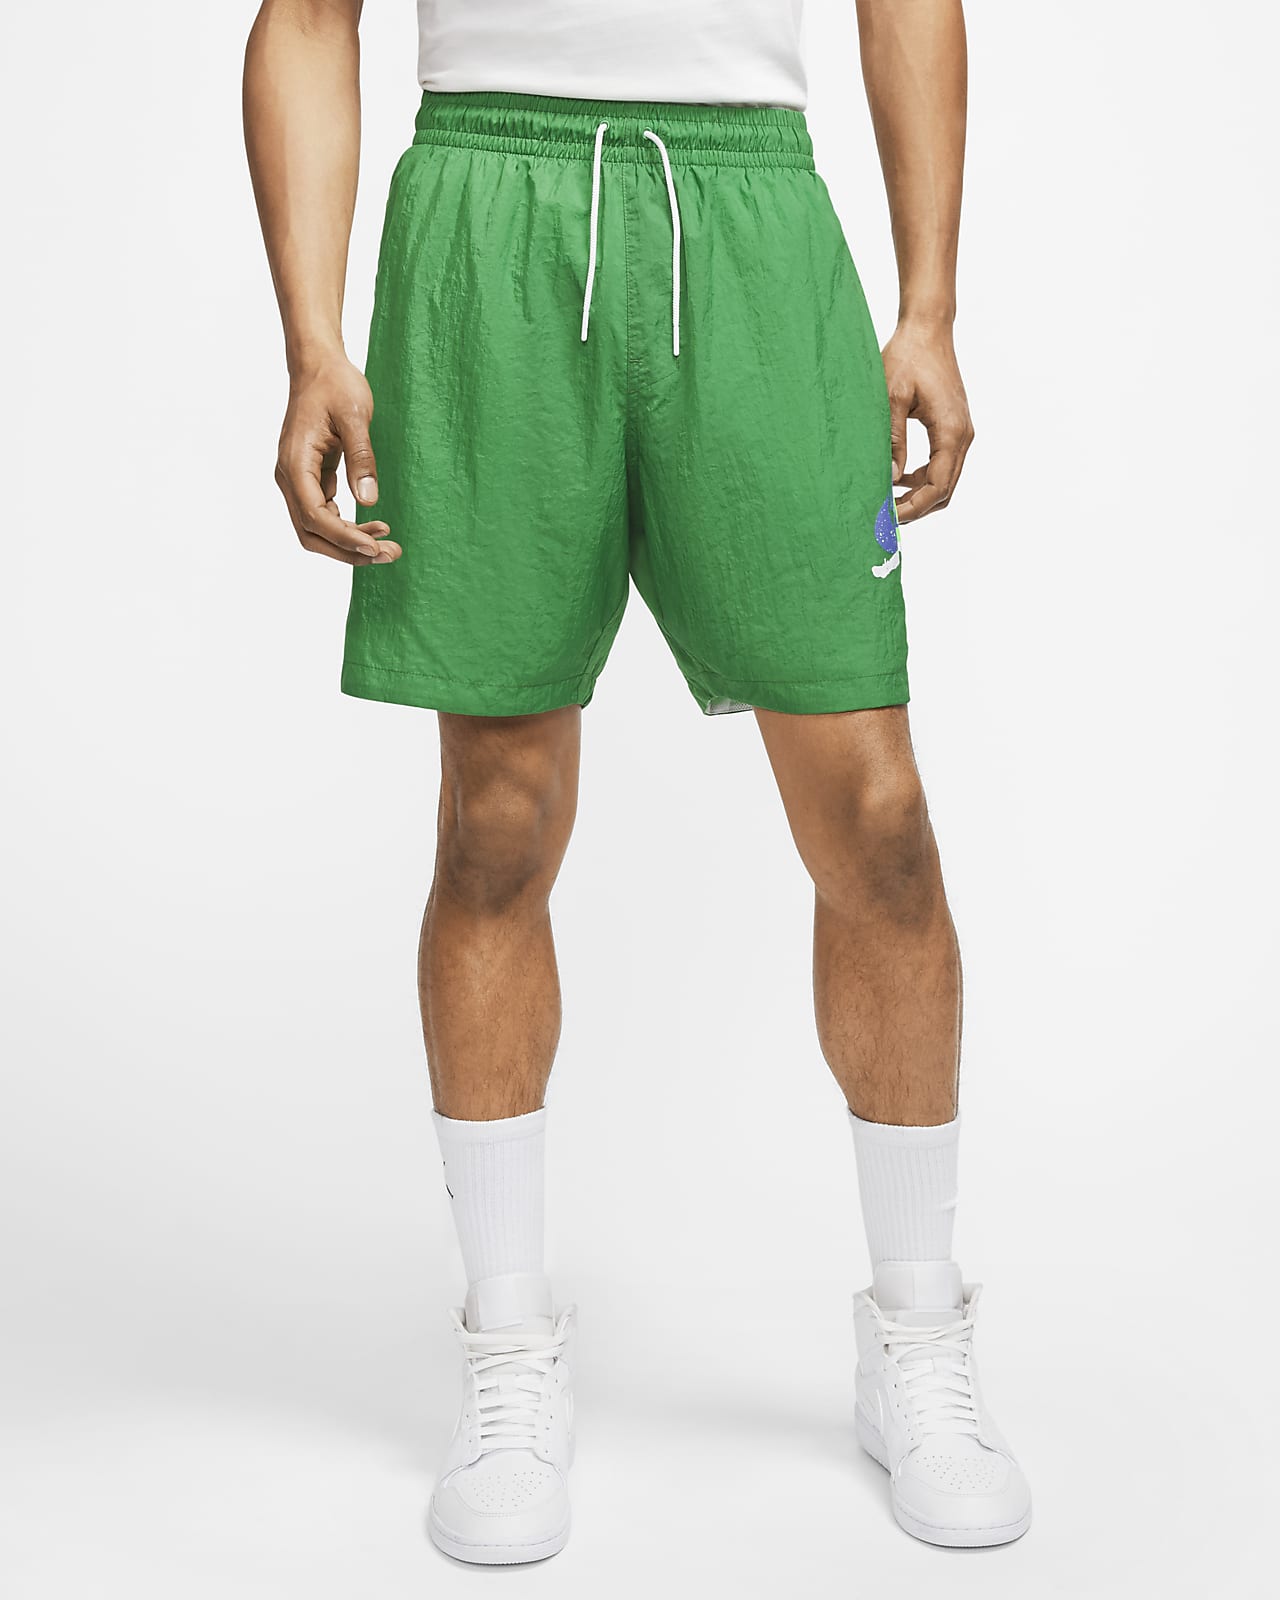 green shorts nike